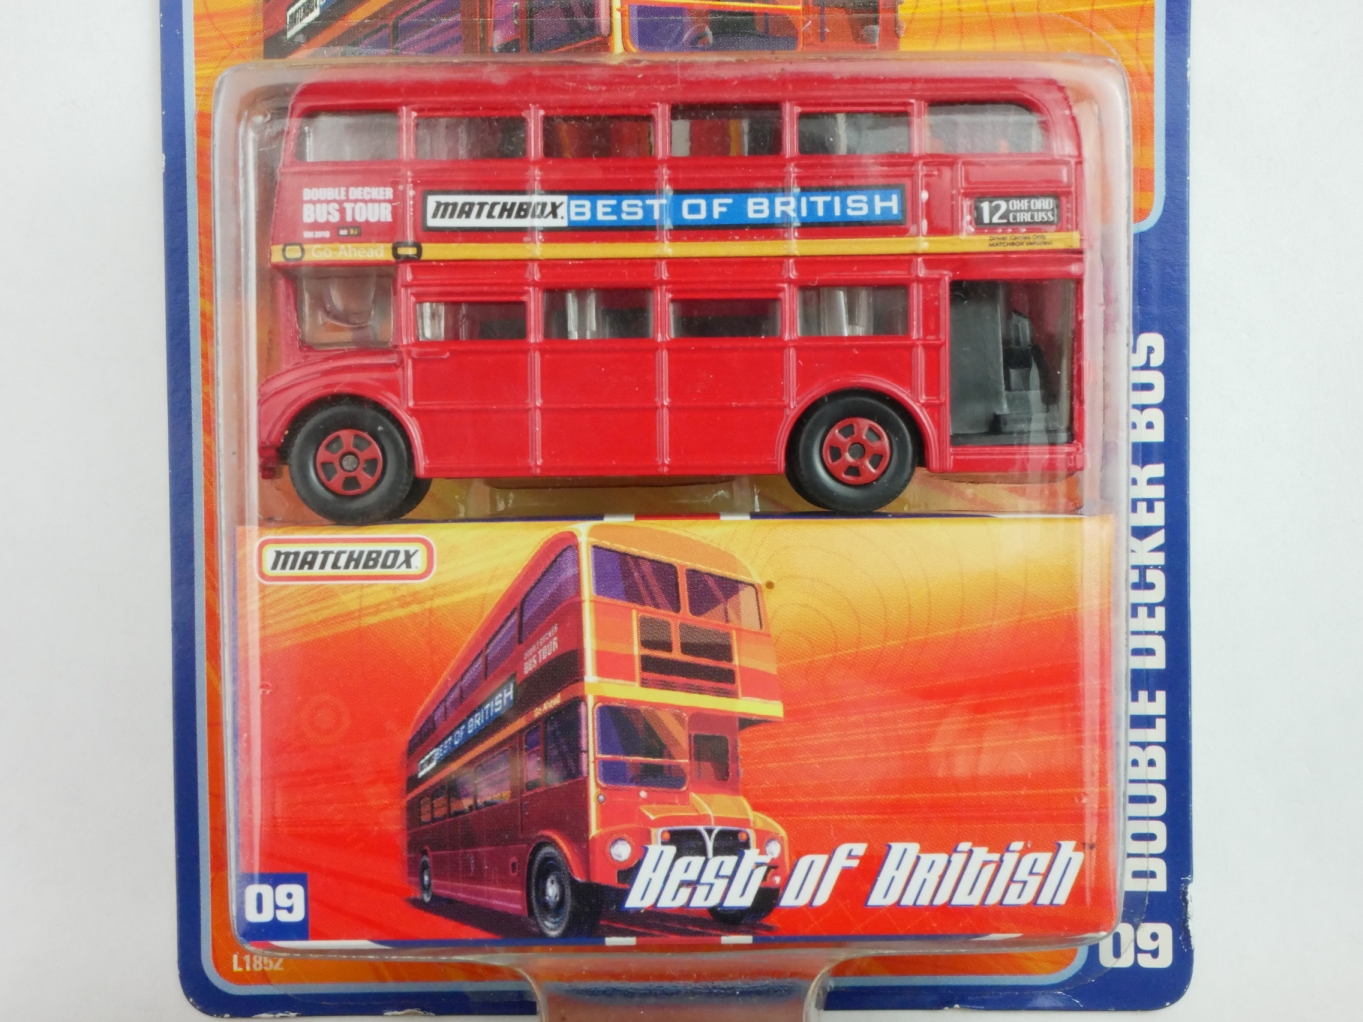 09 Double Decker Bus - 10058